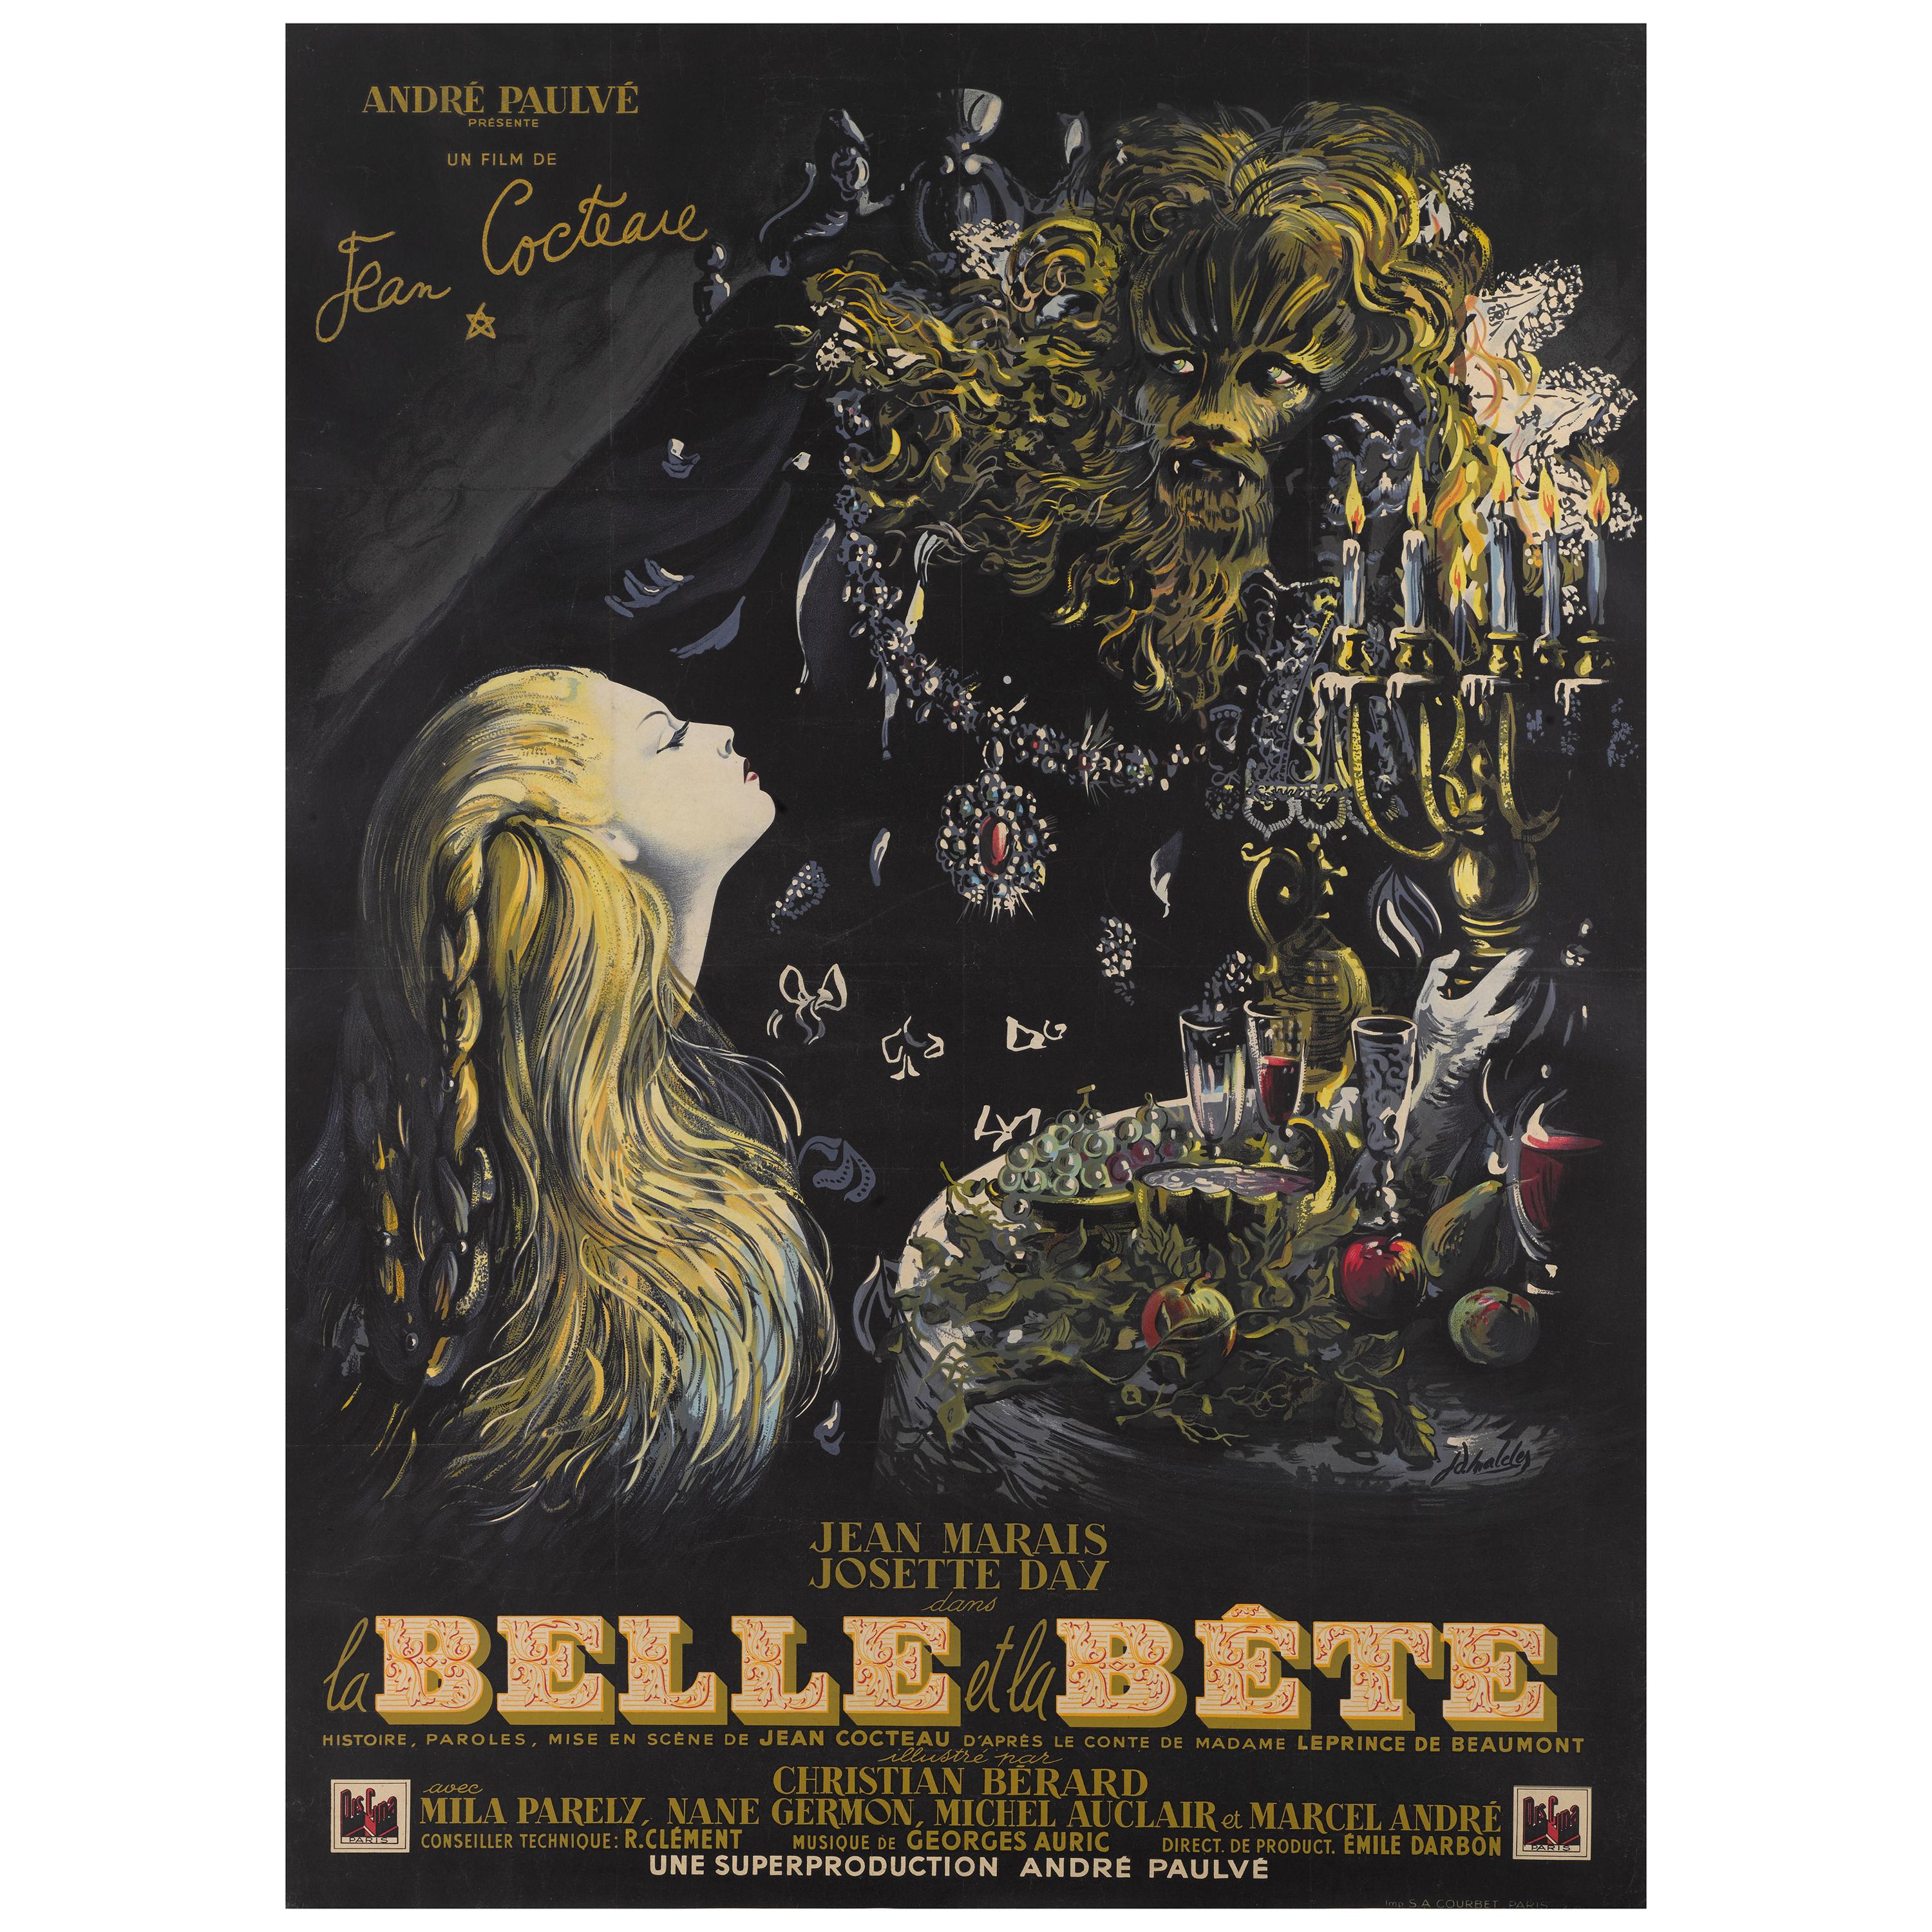 La Belle Et La Bete or Beauty and the Beast